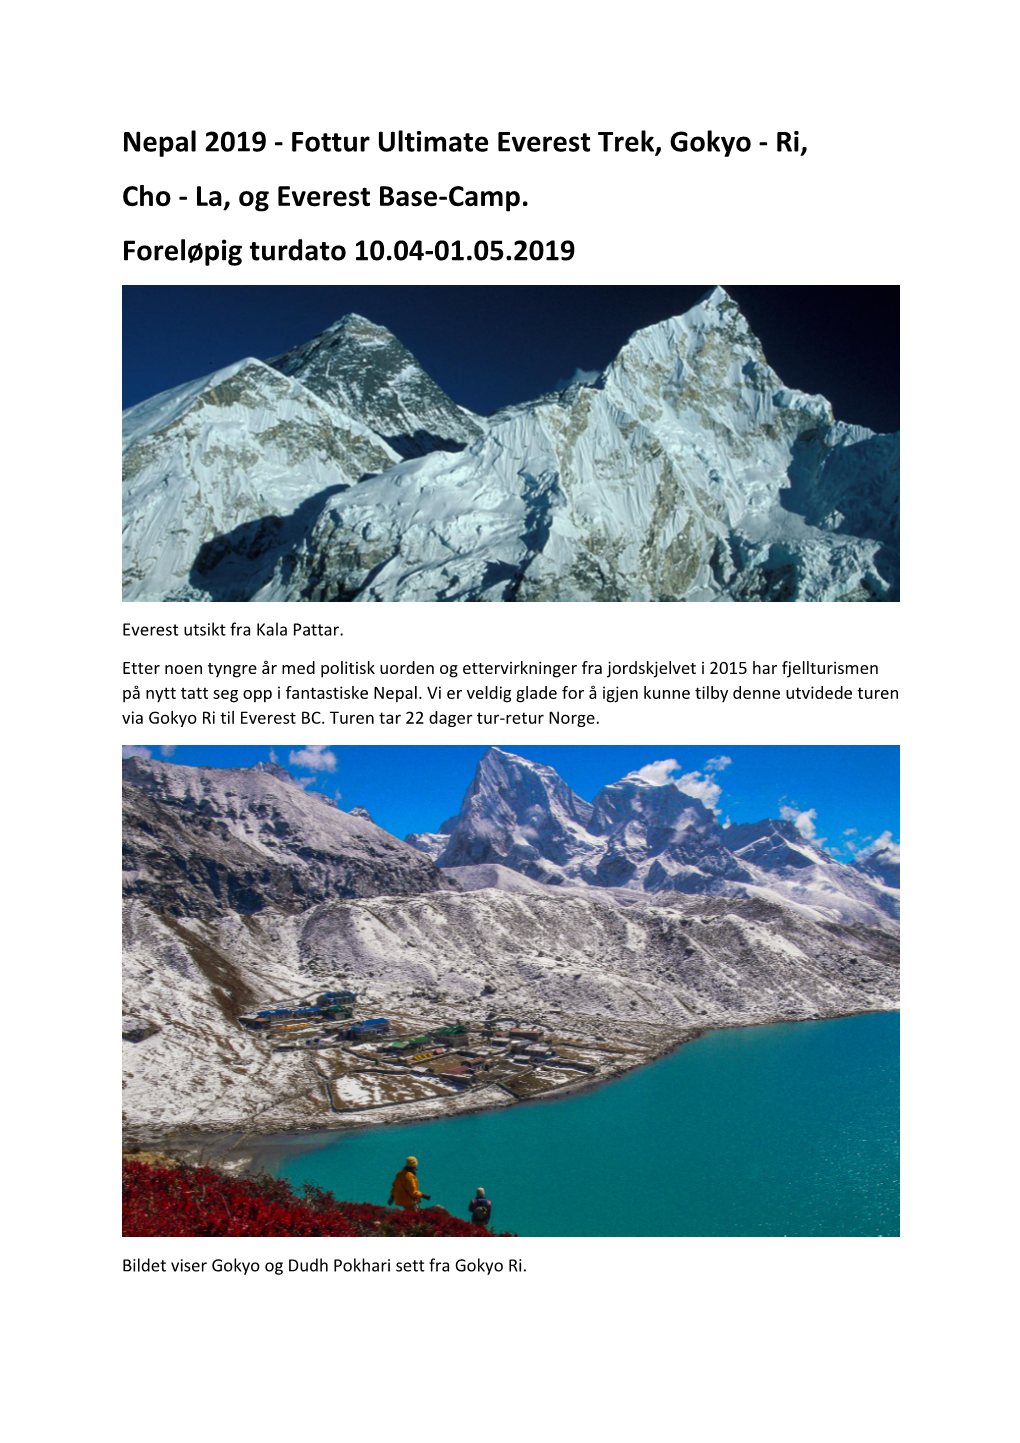 Nepal 2019 - Fottur Ultimate Everest Trek, Gokyo - Ri, Cho - La, Og Everest Base-Camp